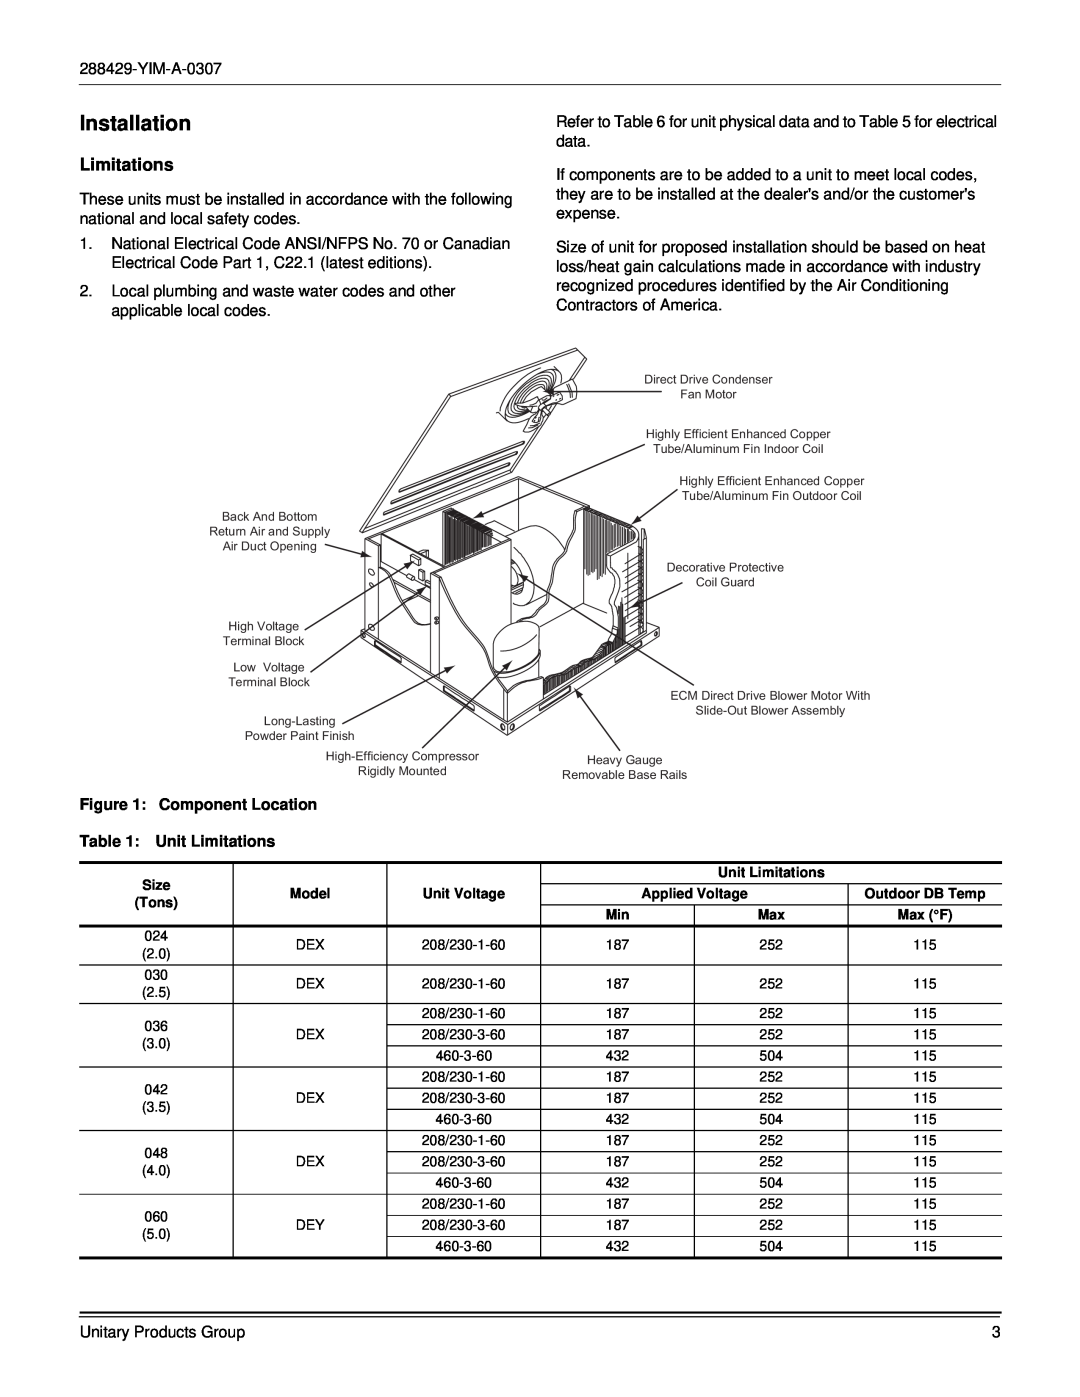 York R-410A dimensions Installation, Component Location, Unit Limitations 